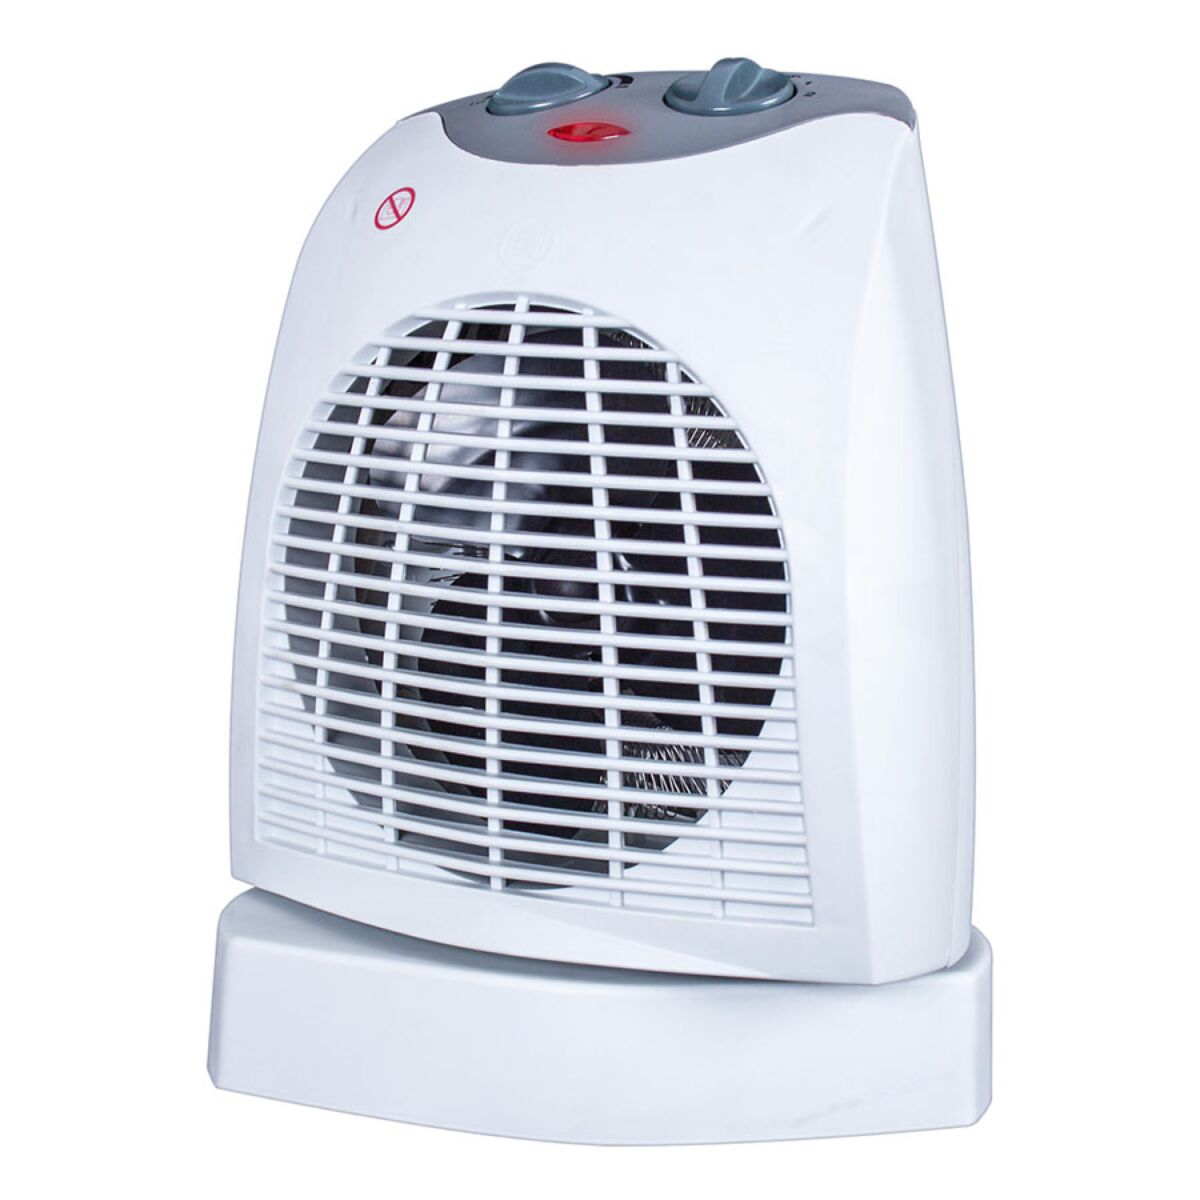 Silentnight 2kw 90 Oscillating Fan Heater with size 1200 X 1200